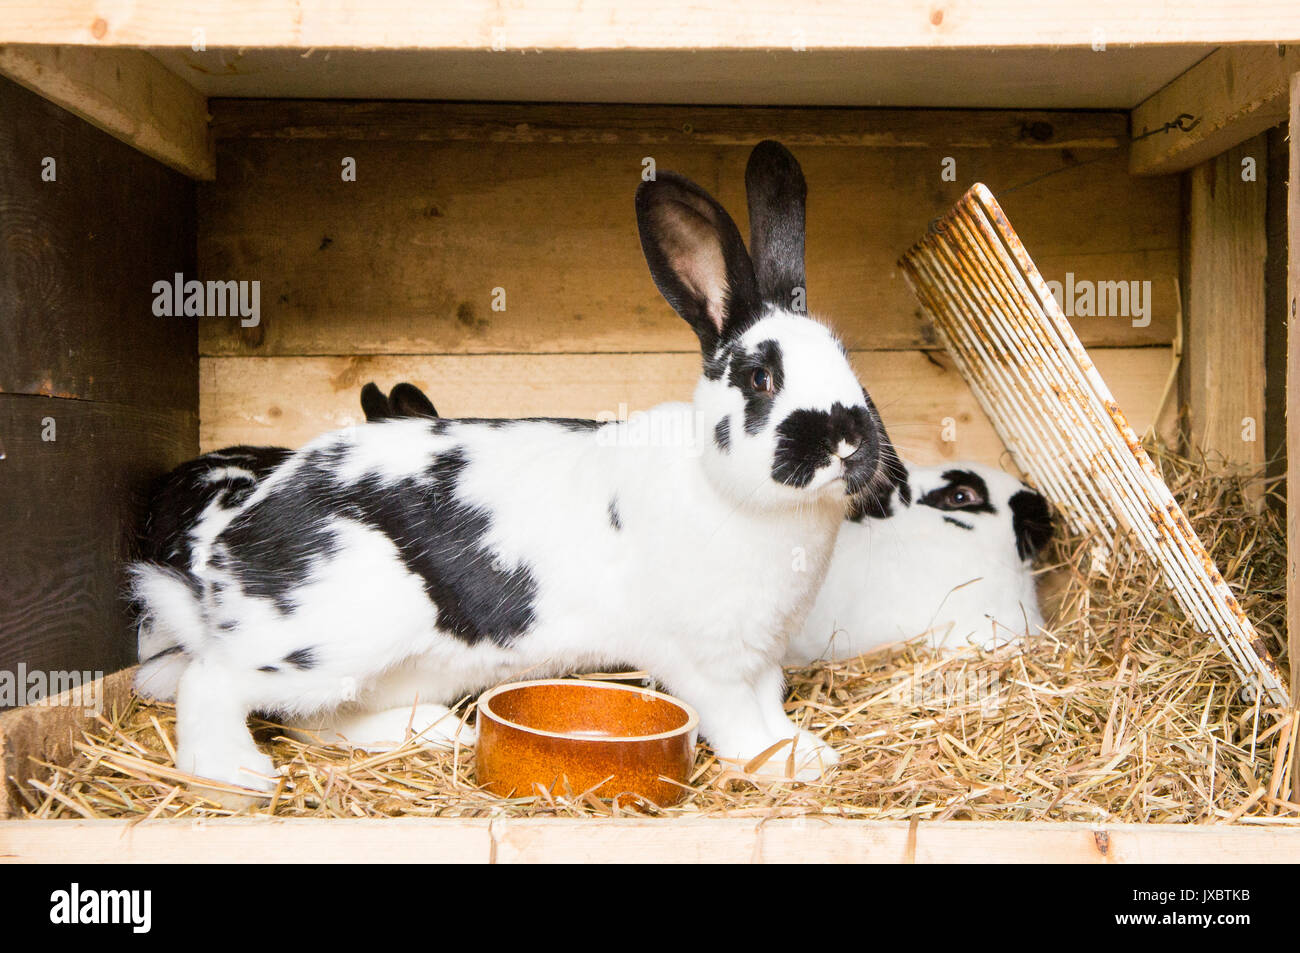 https://c8.alamy.com/comp/JXBTKB/domestic-rabbit-straw-bedding-in-hutch-JXBTKB.jpg